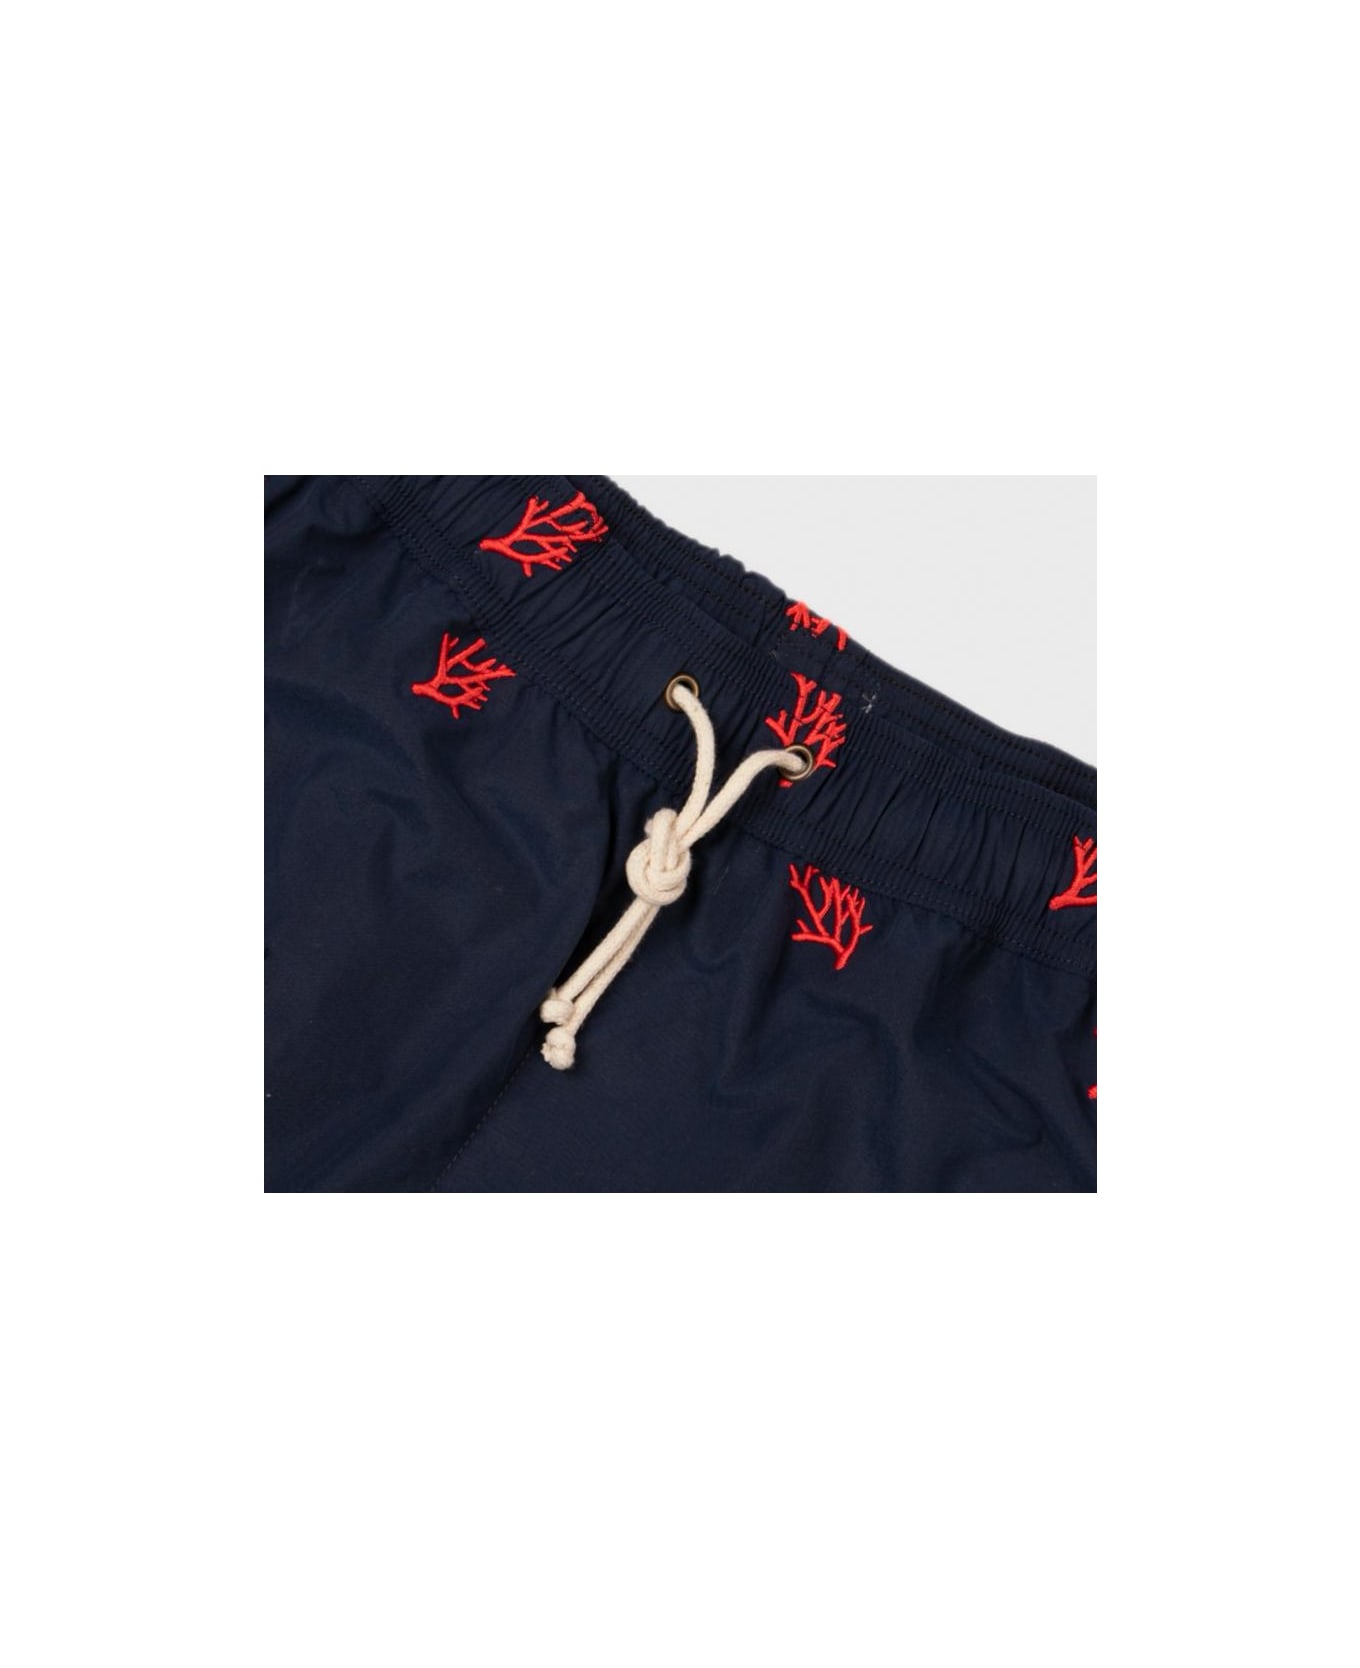 Ripa Ripa Positano Embroidered Swim Shorts - Embroidered スイムトランクス